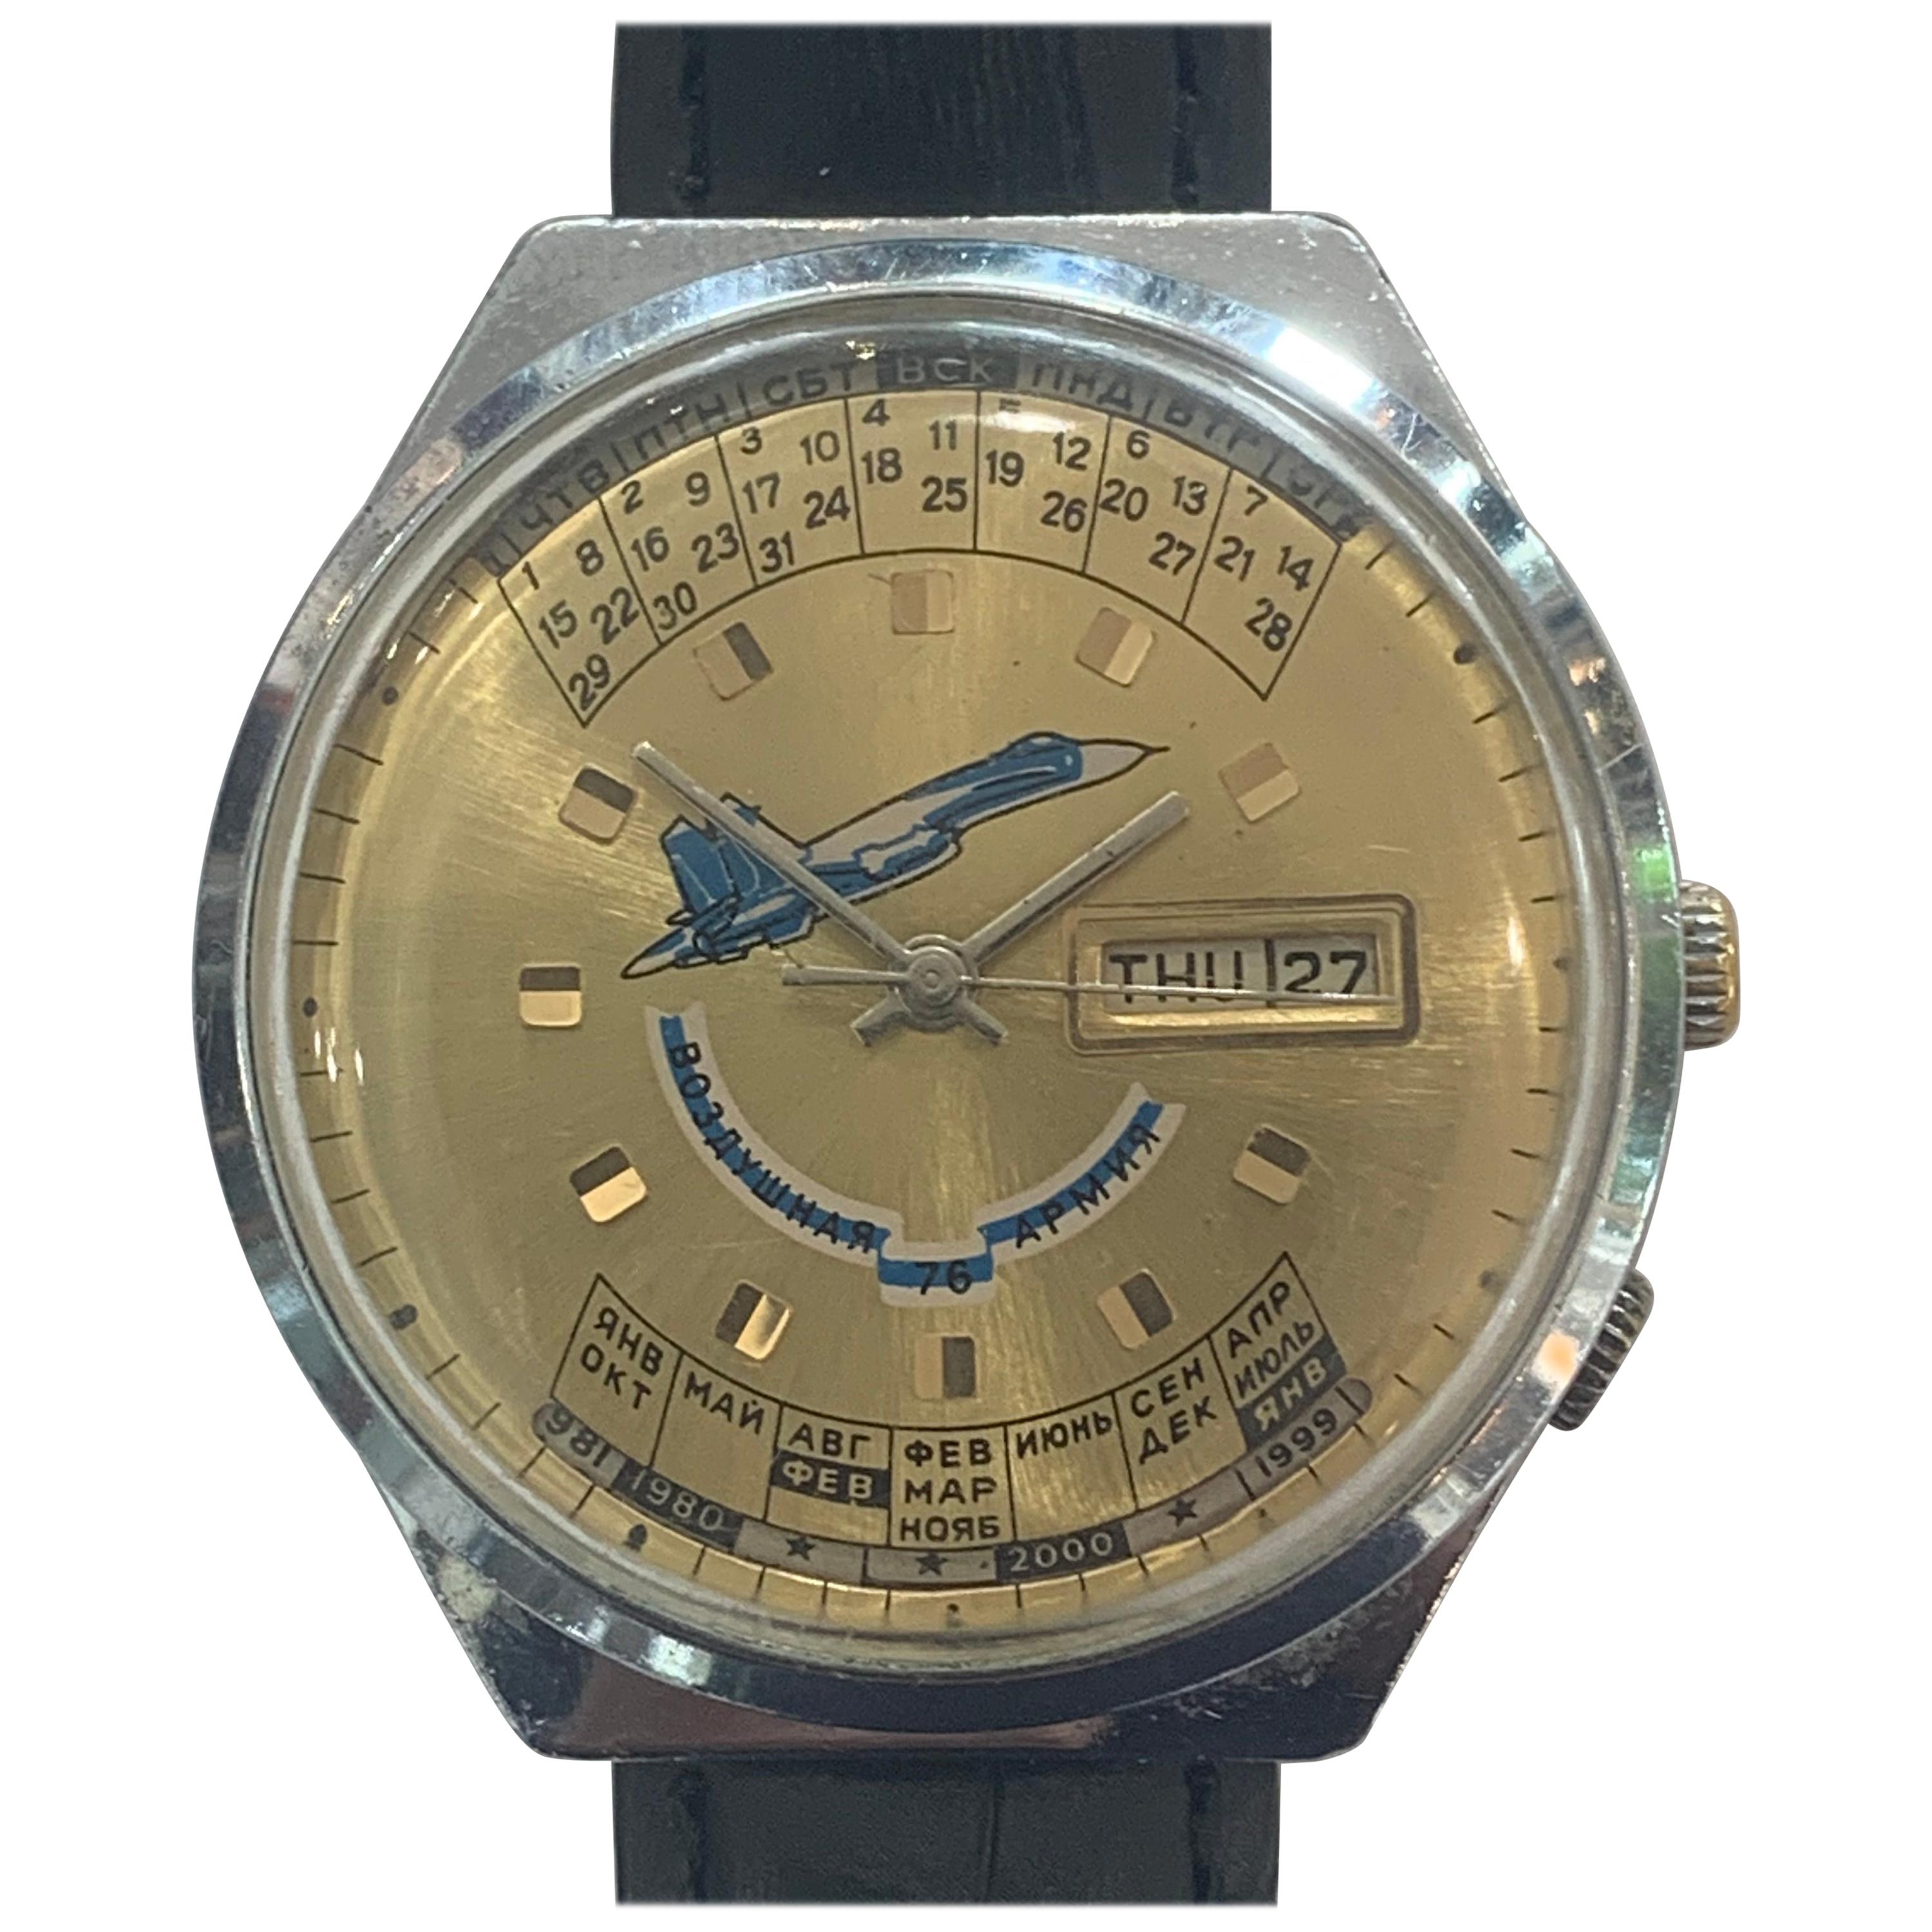  Mid Century Russian Watch by “Raketa” or  “Rocket Watch Company”. 